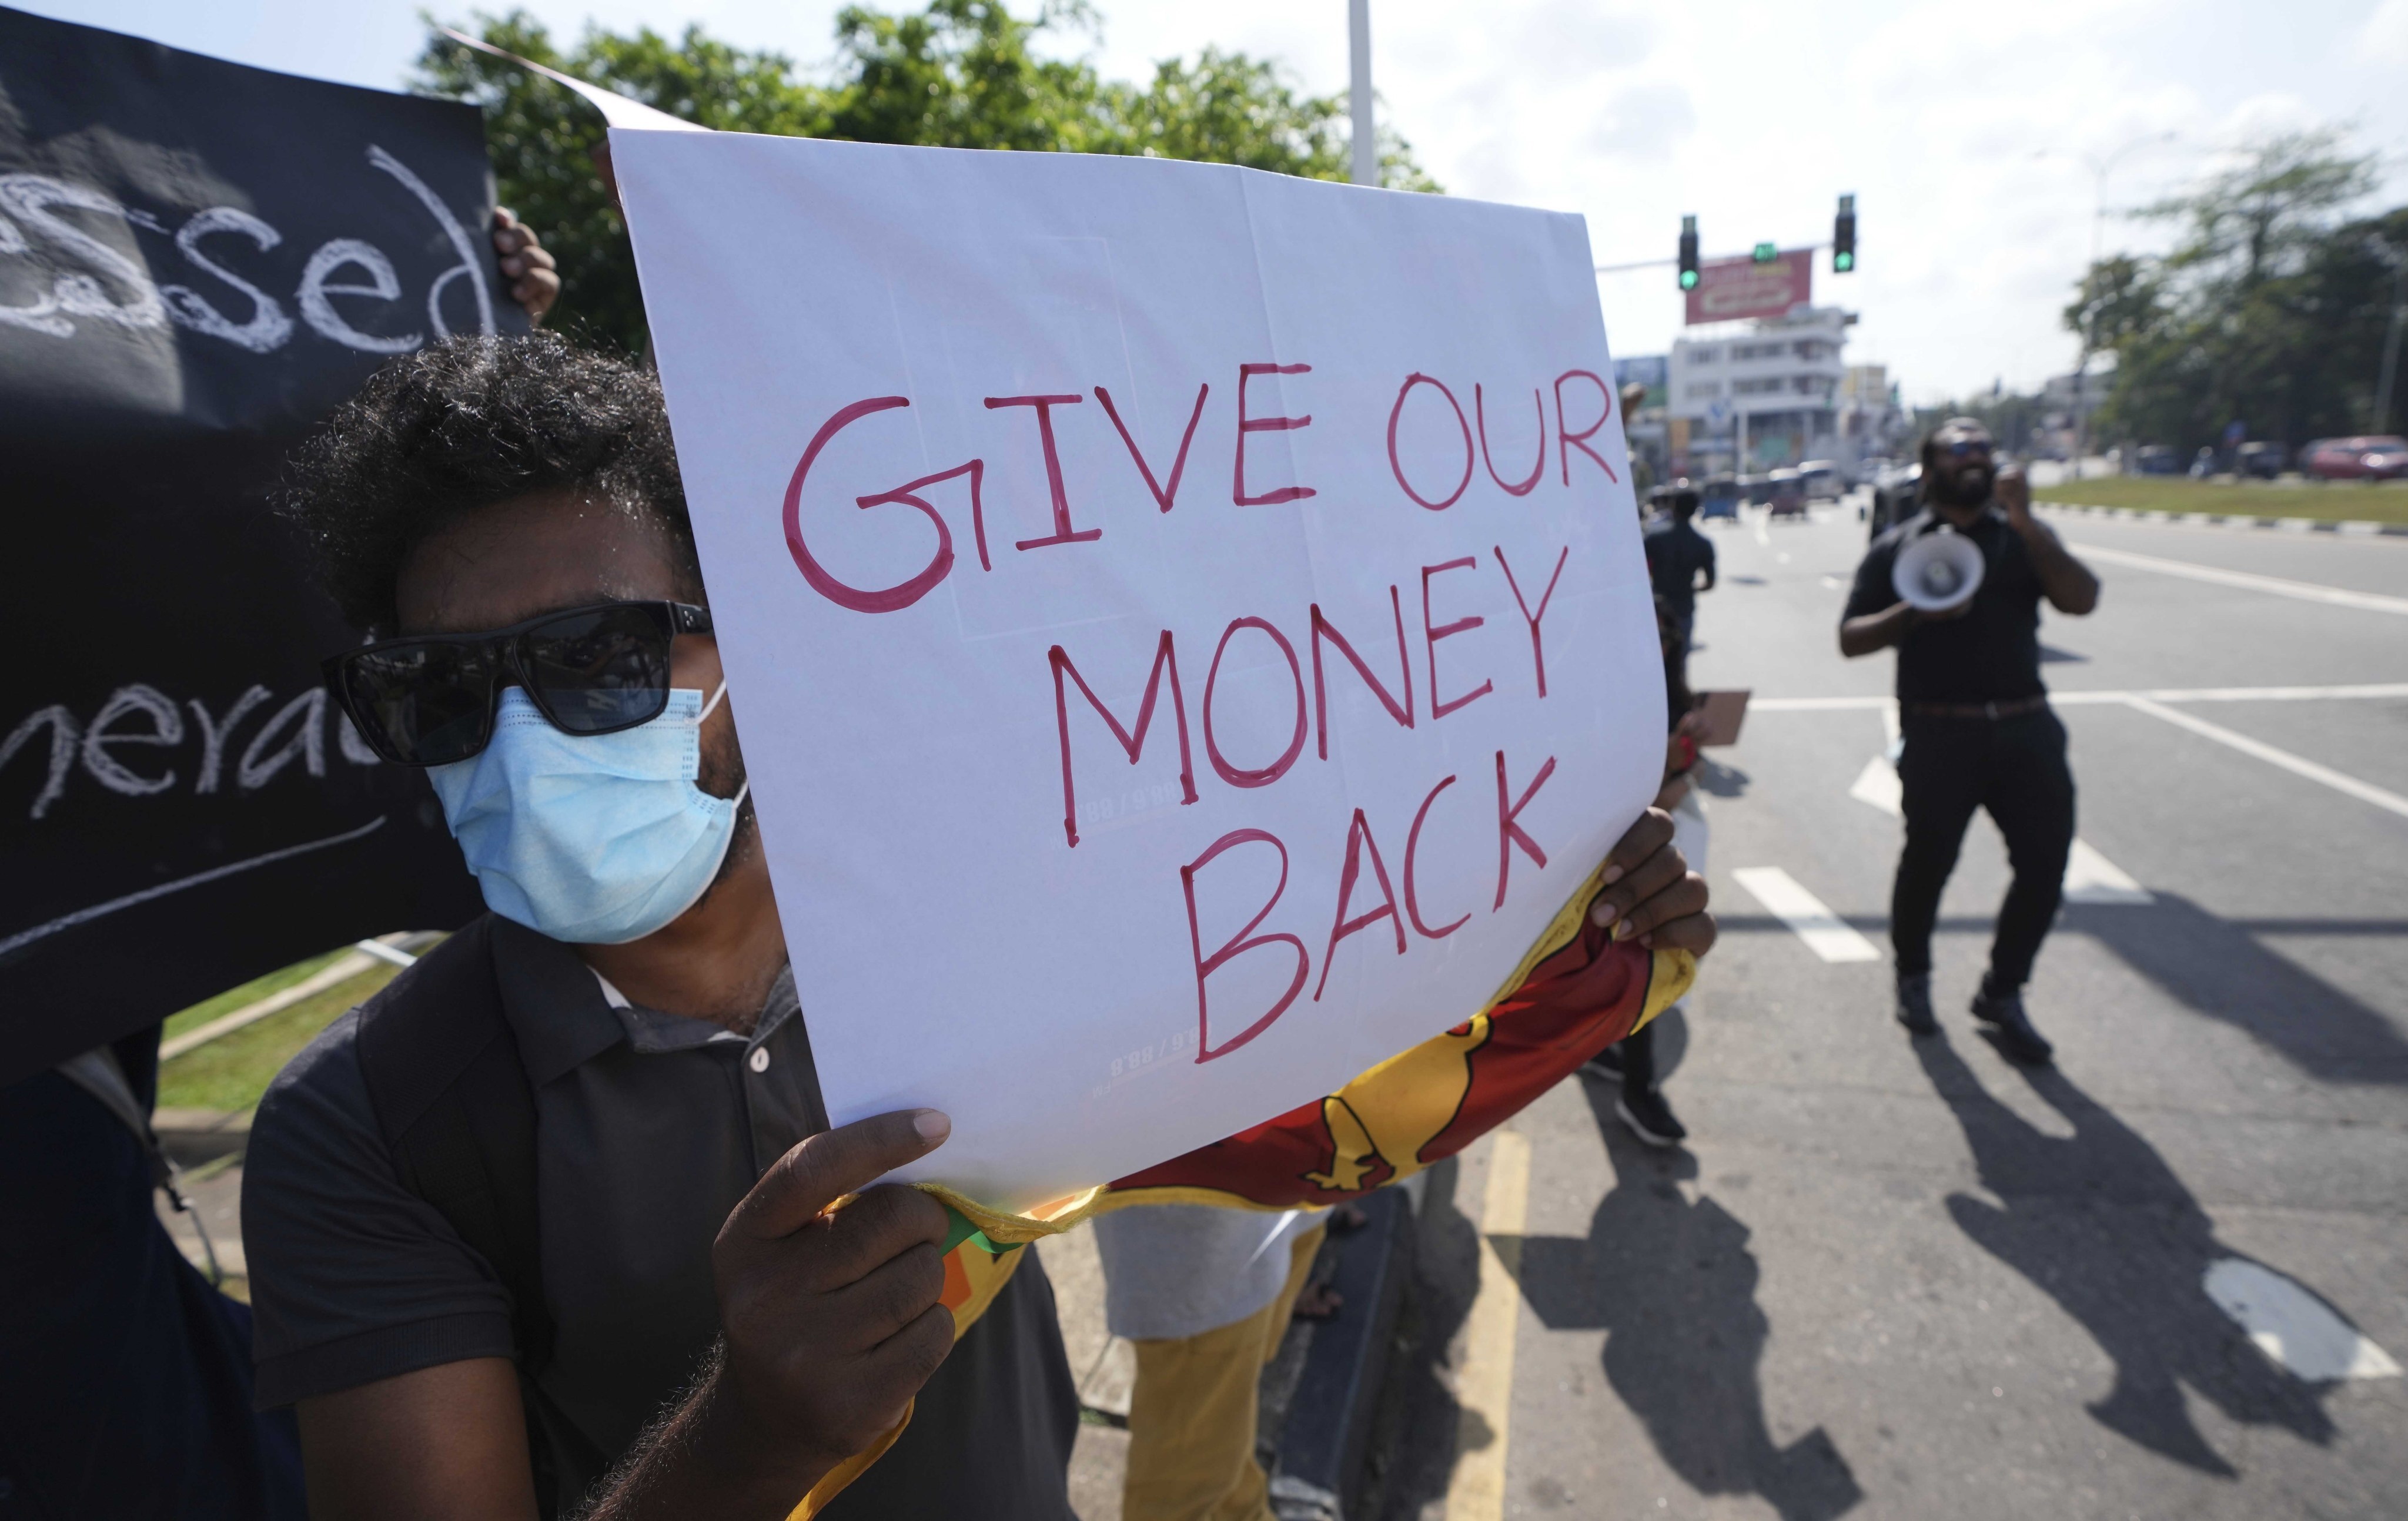 Sri lanka economic crisis